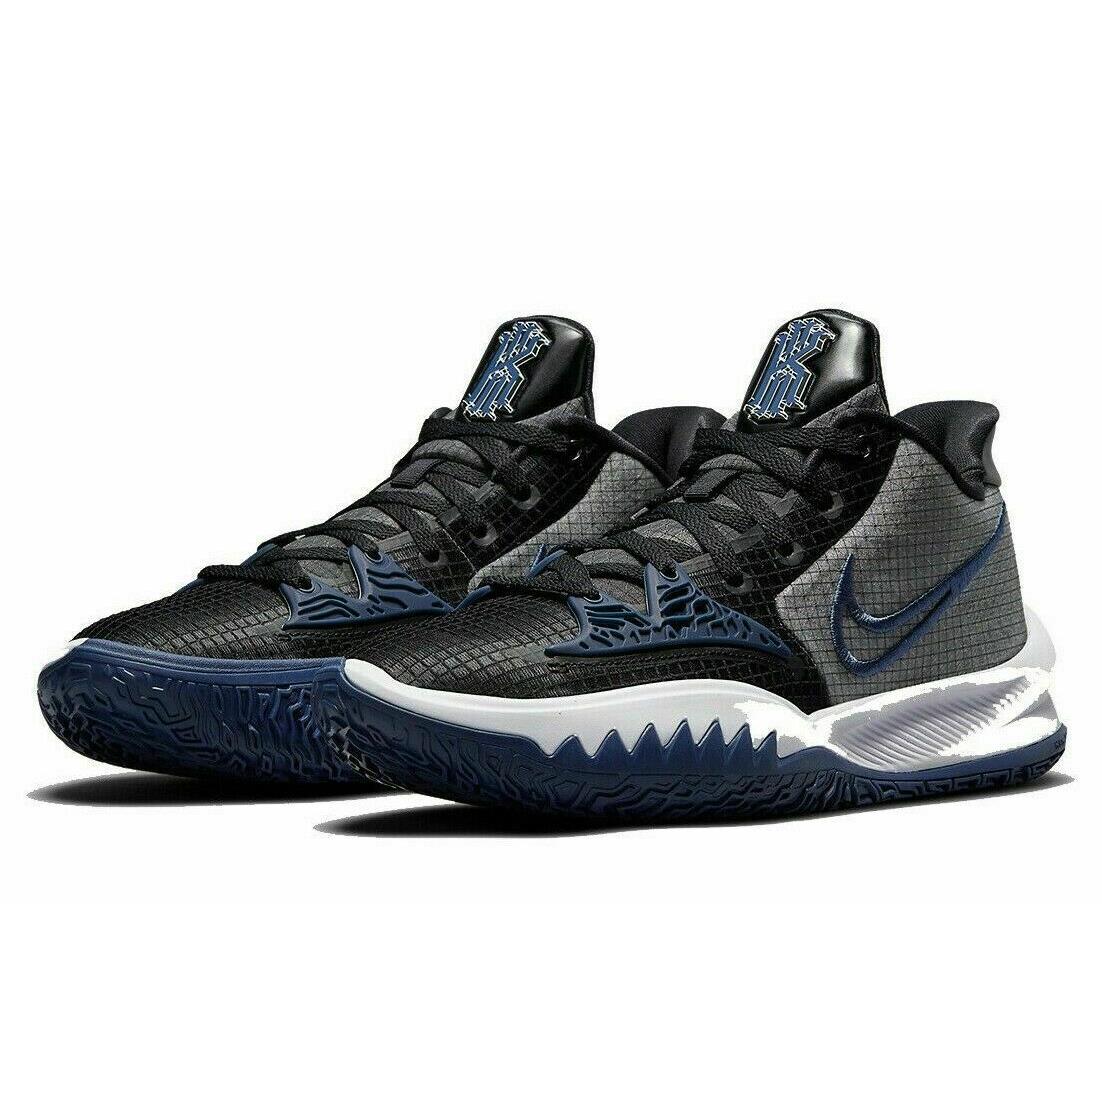 Nike Kyrie Low 4 TB Mens Size 8.5 Sneaker Shoes DA7803 004 Black Midnight Navy - Black